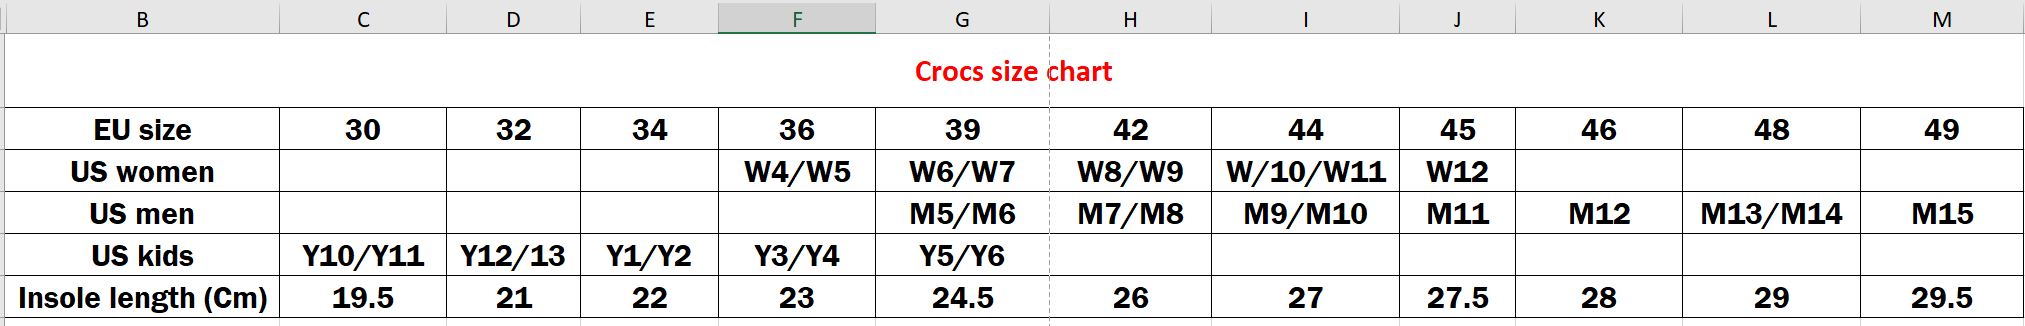 crocs size 45